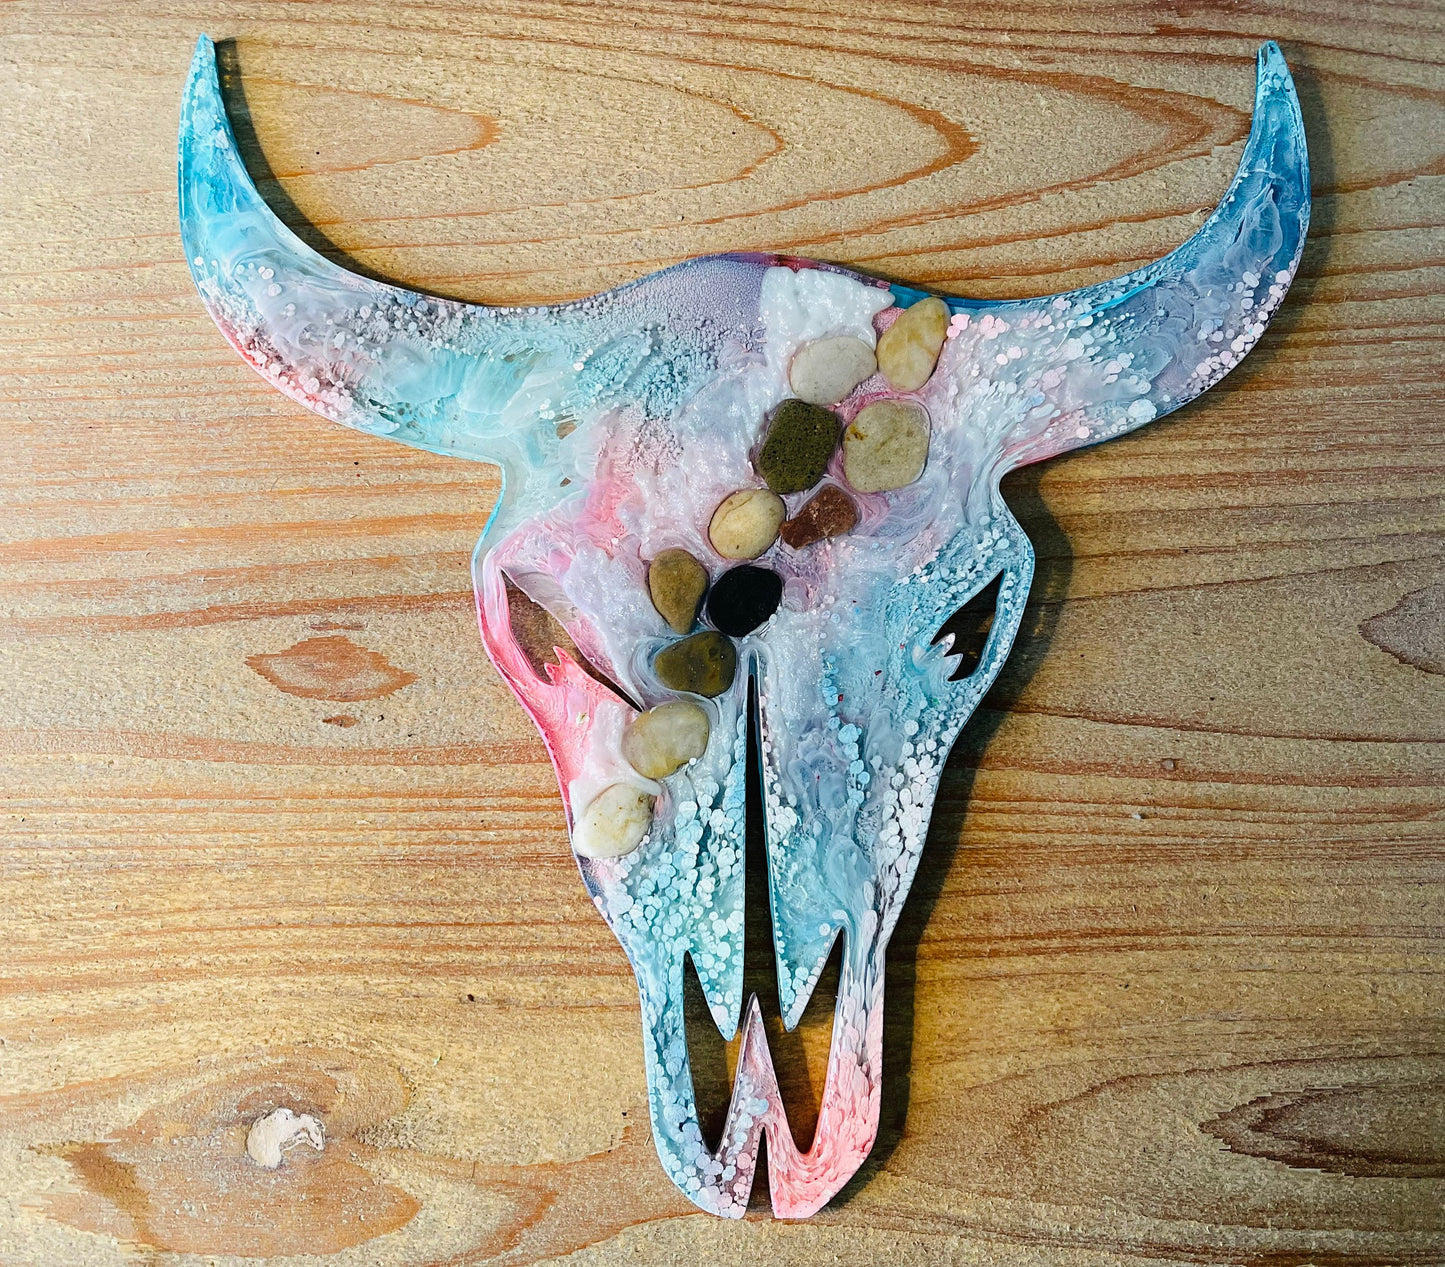 Cotton candy cow skull resin art wall/door hanging.